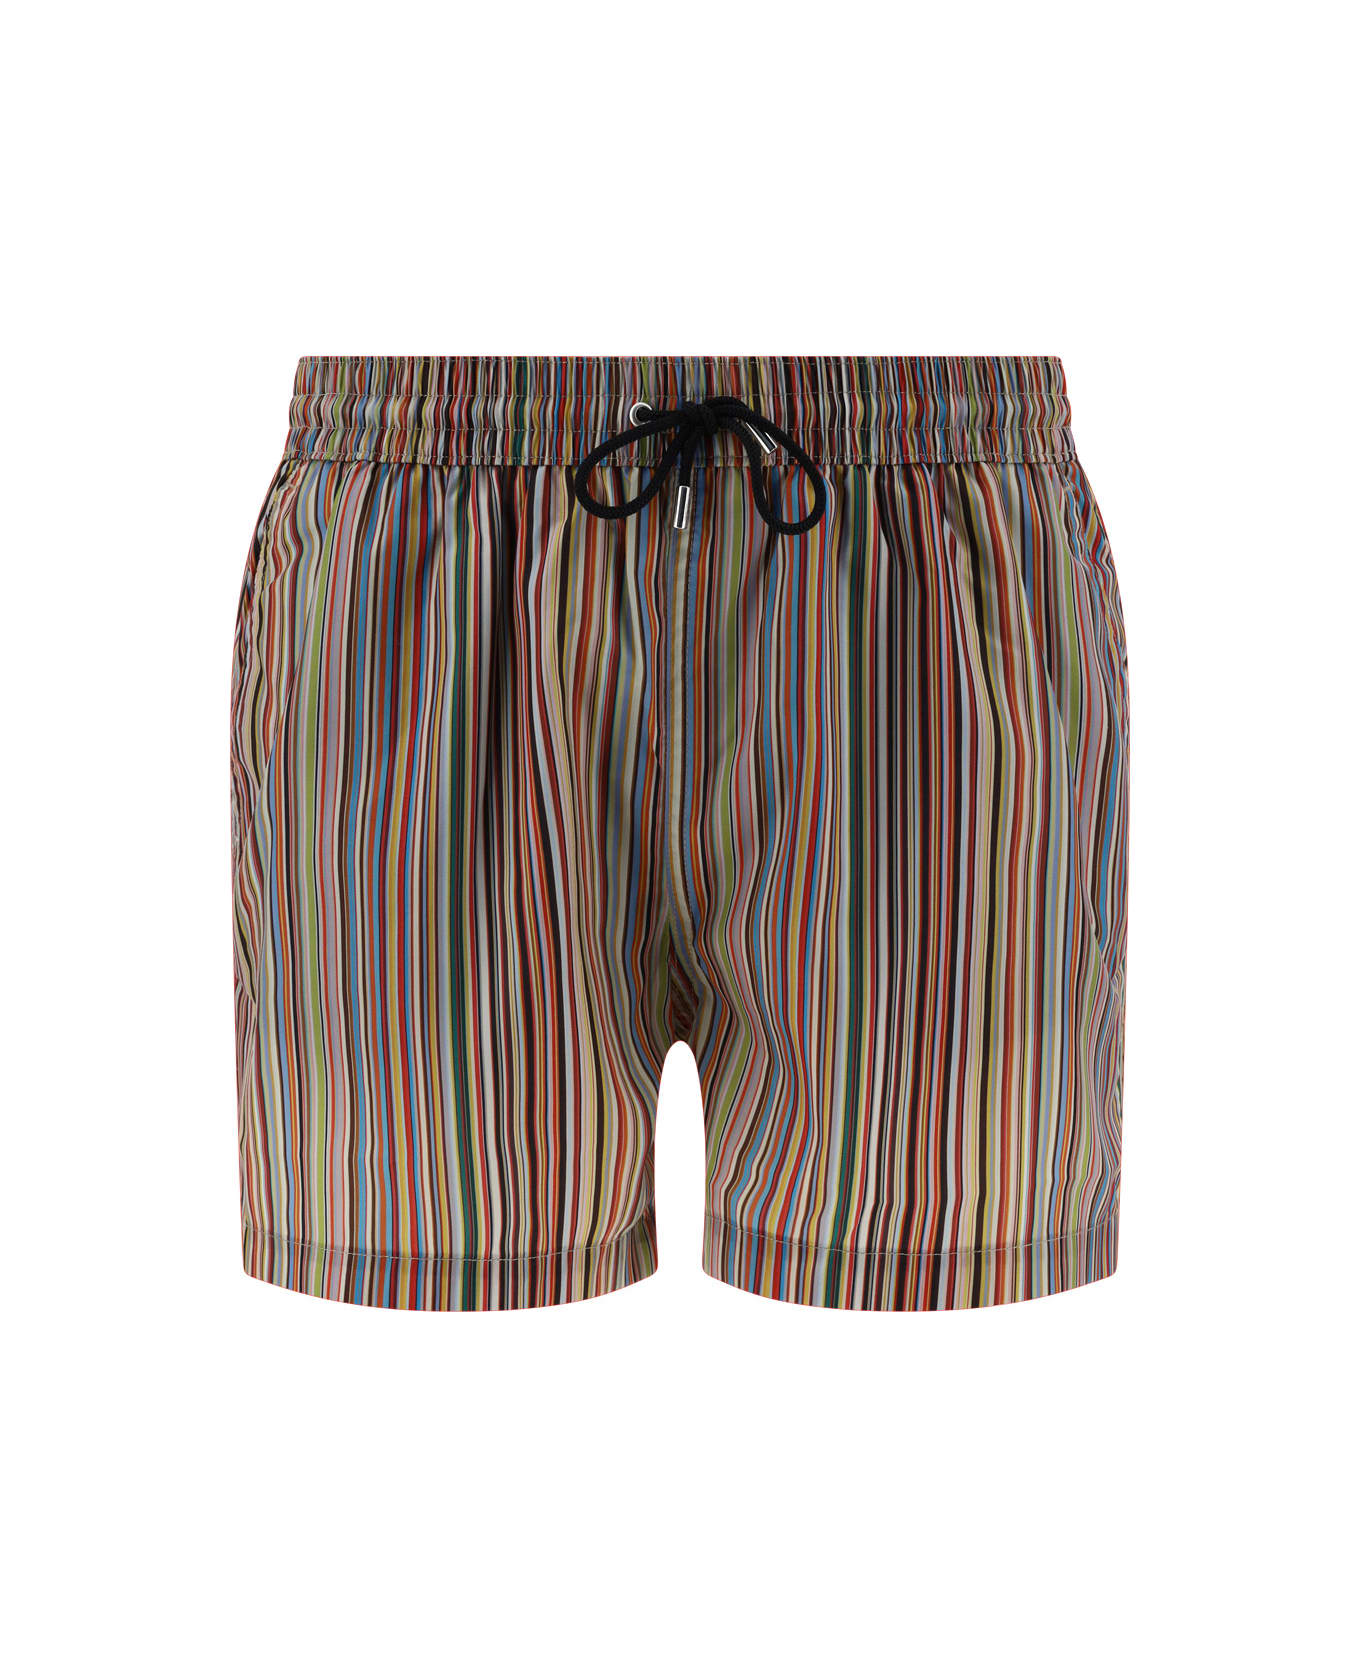 Paul Smith Swimshorts Pants - Multicolore